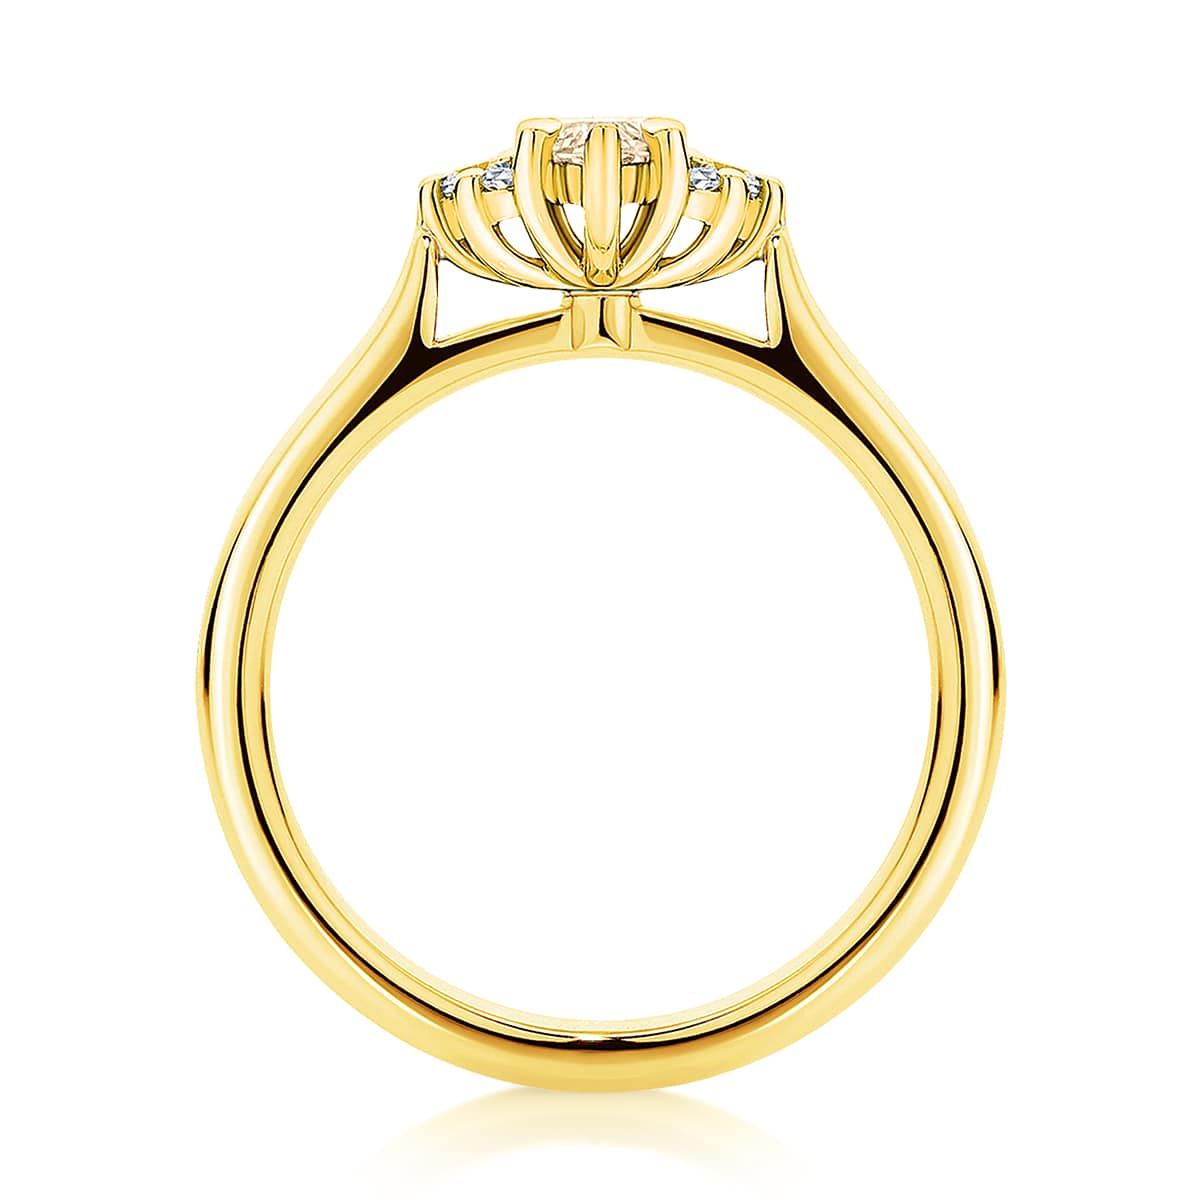 Bachelor Engagement Ring 2023 | Cyra Champagne Diamond